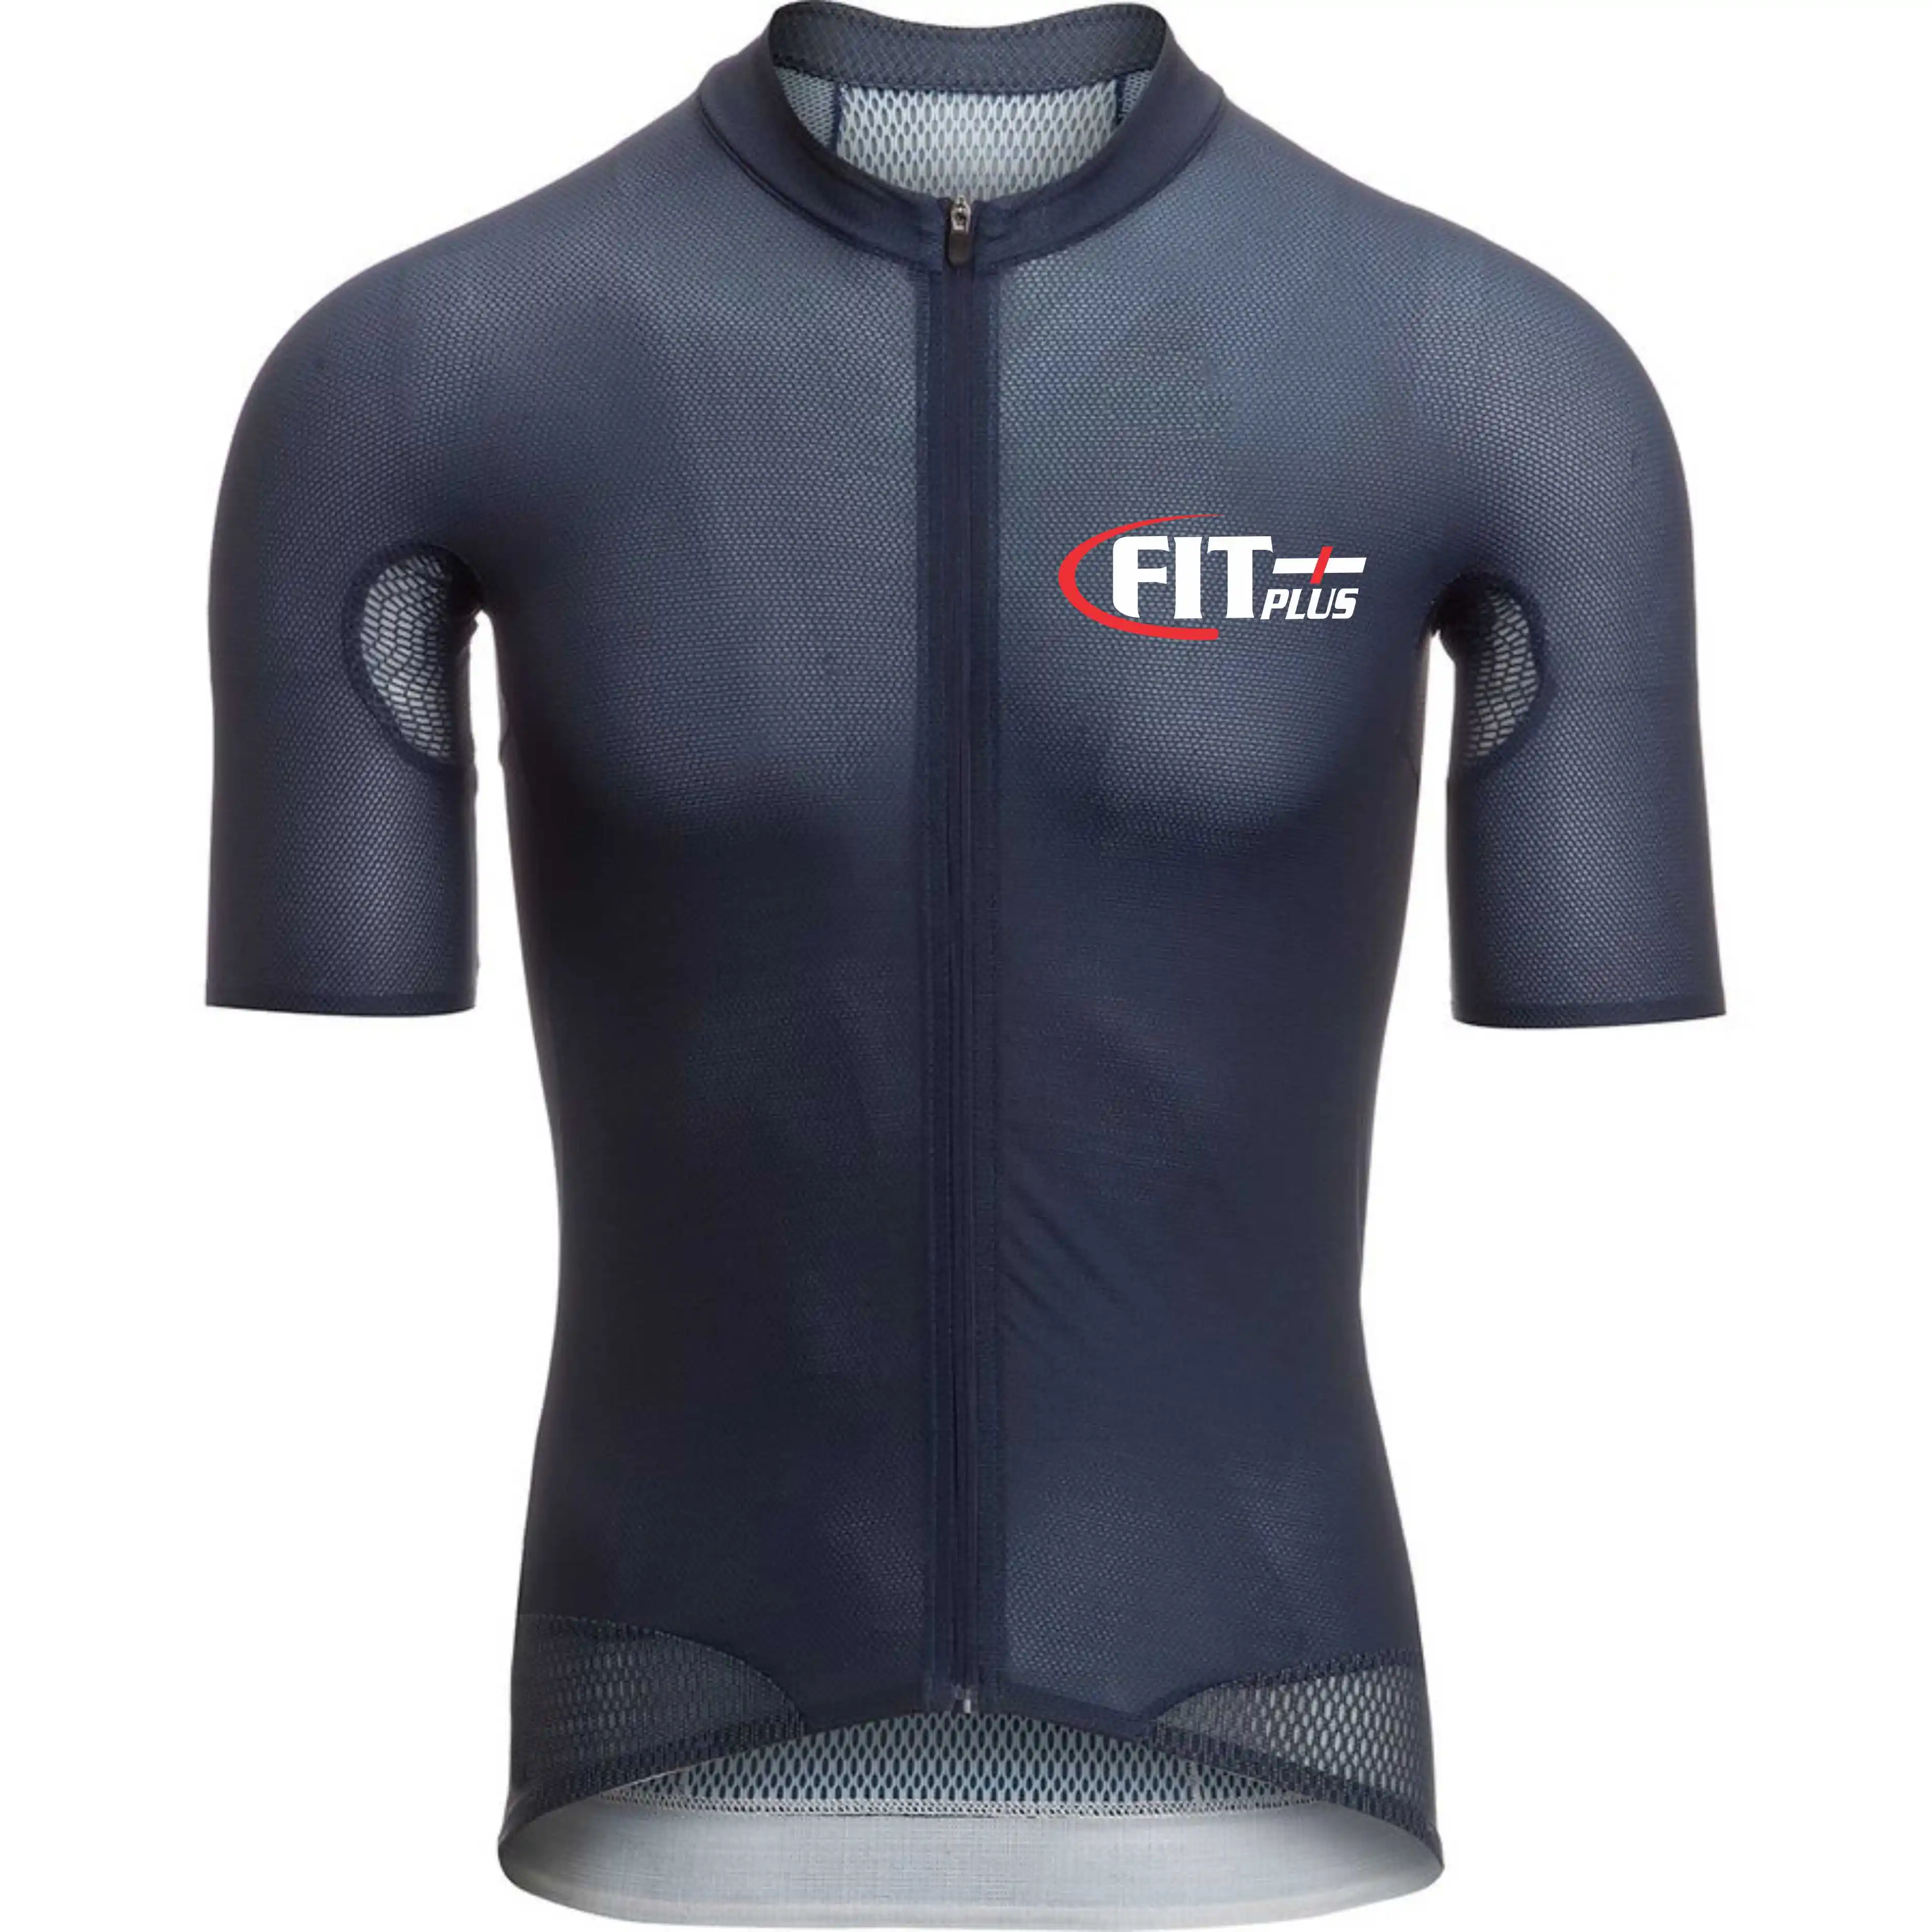 OEM custom Pro team road bicycle jersey abbigliamento da ciclismo top jersey camicie abbigliamento da ciclismo maglia da ciclismo personalizzata